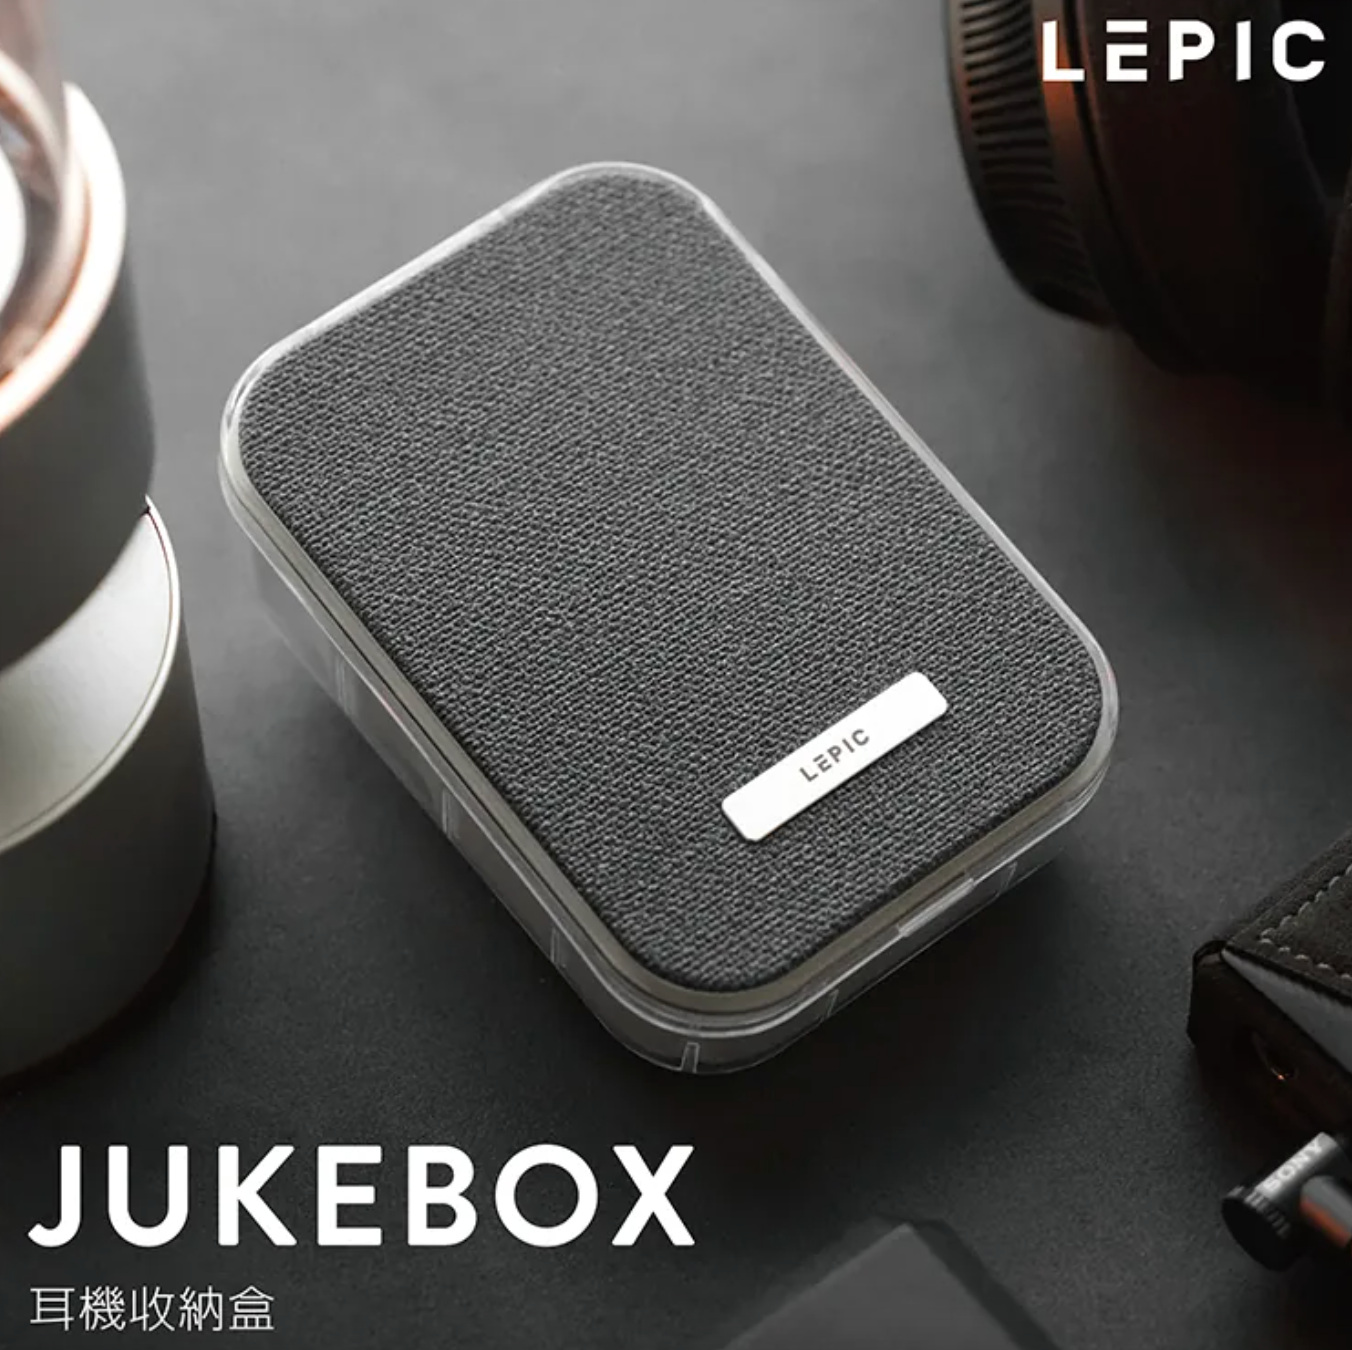 Lepic Jukebox headphone protective case